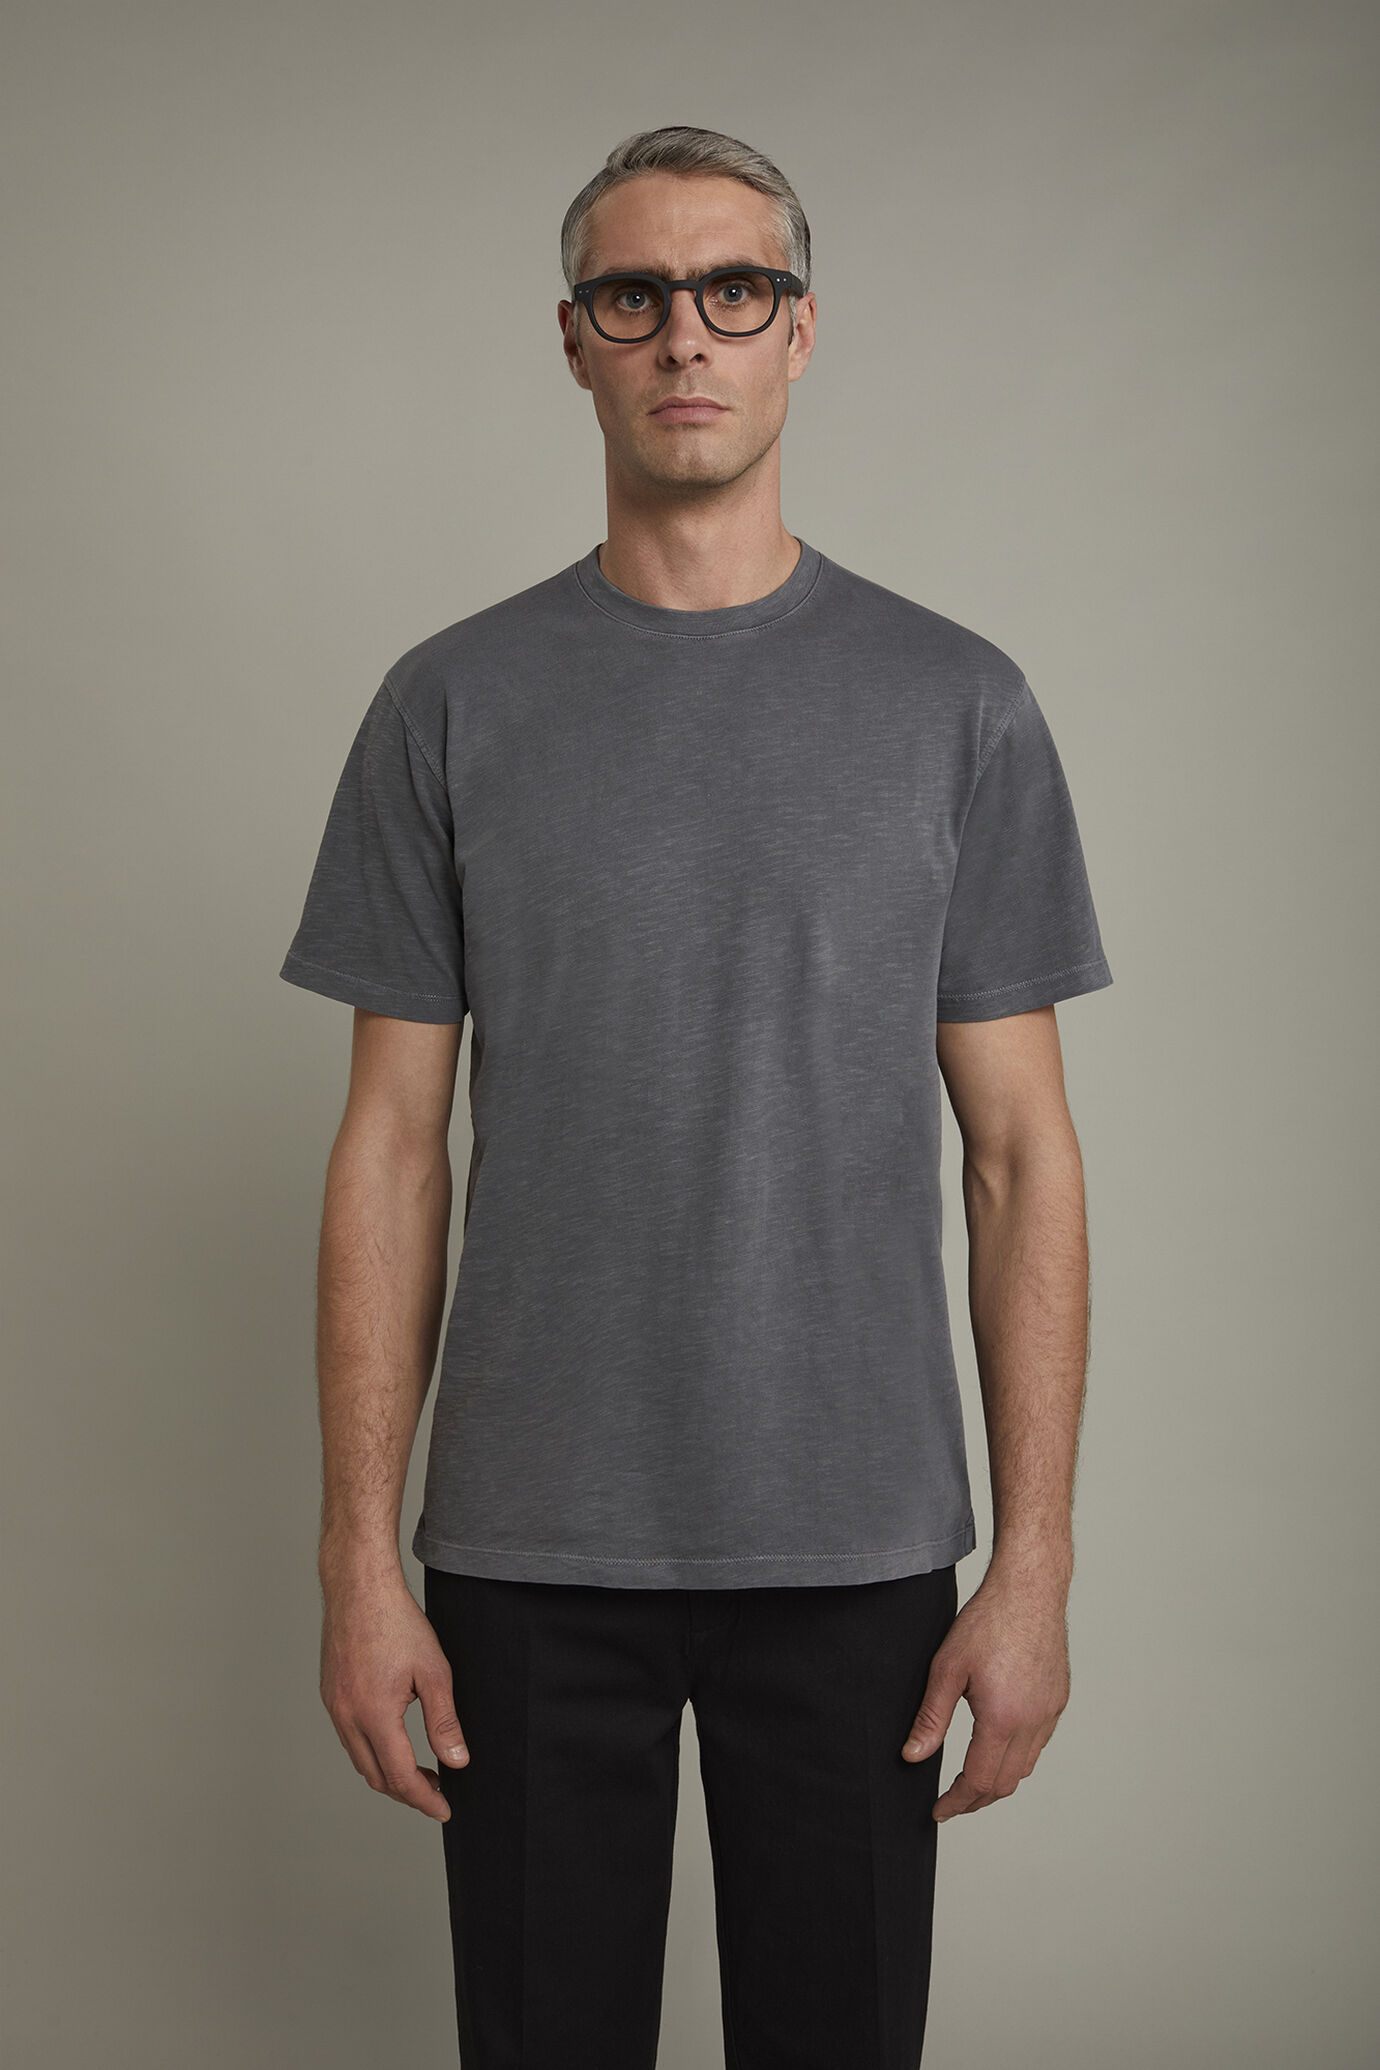 Men’s round neck t-shirt 100% cotton flamed effect regular fit